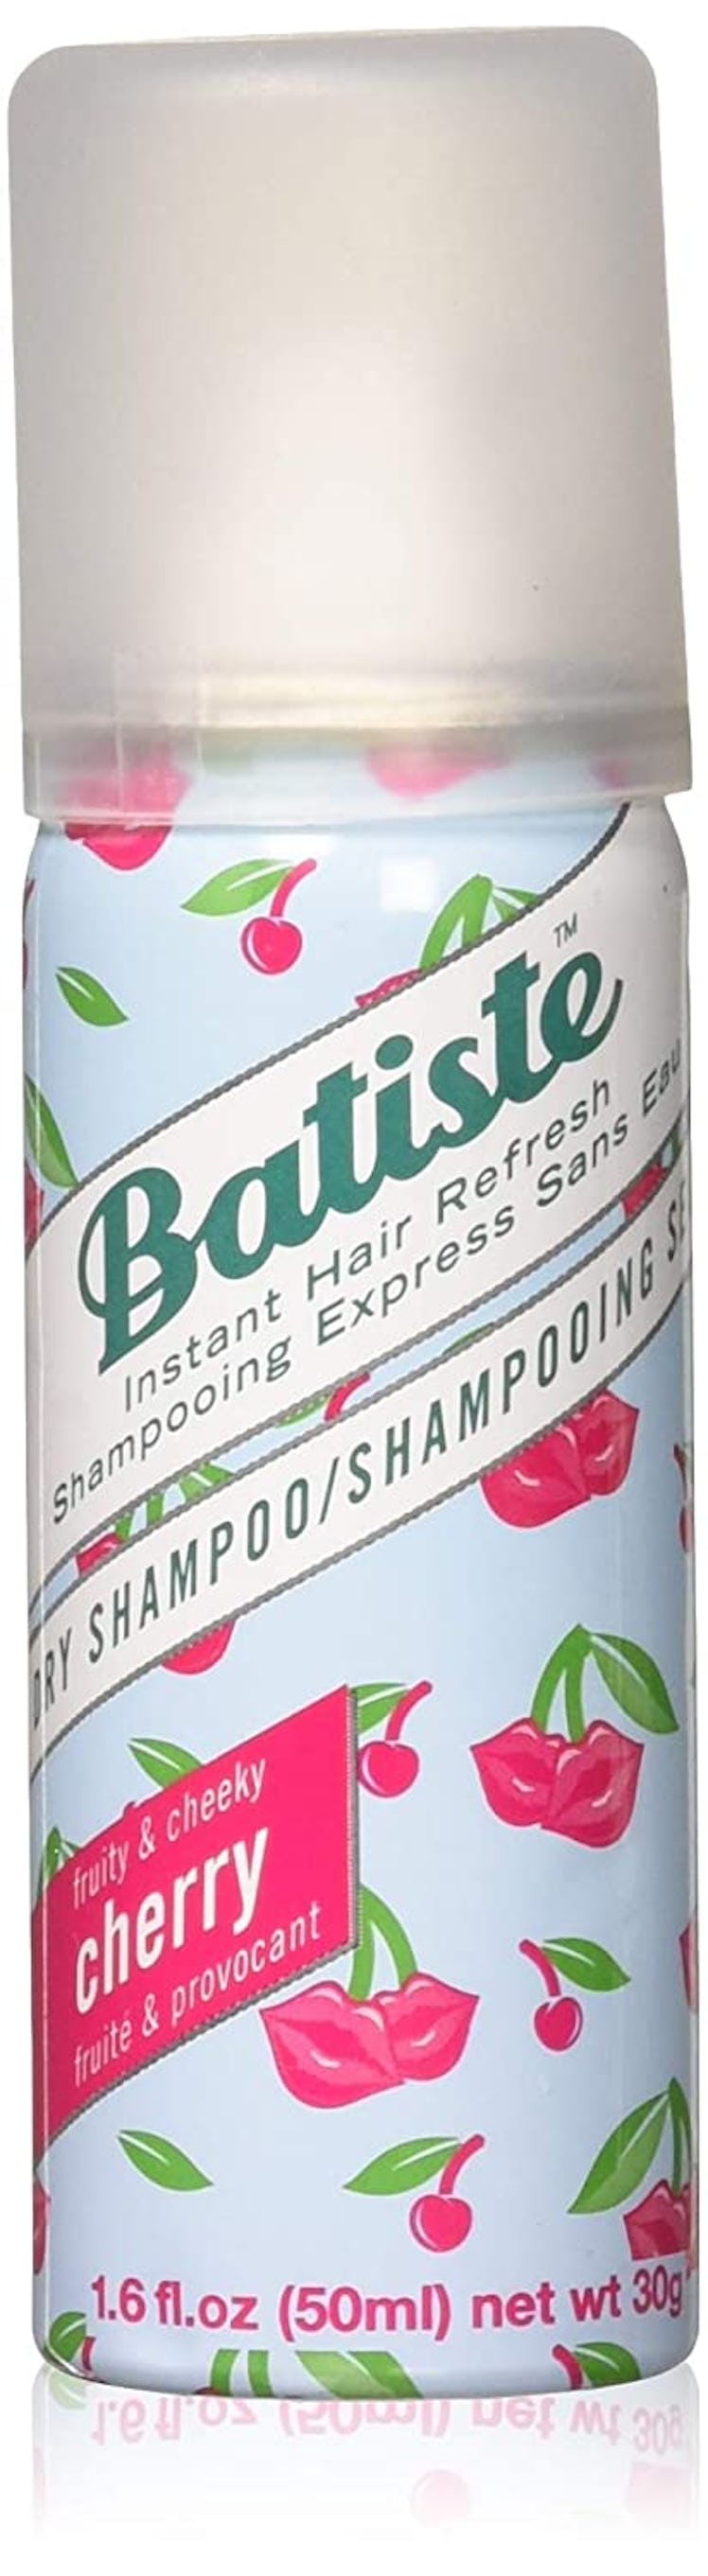 Batiste Travel-Size Dry Shampoo